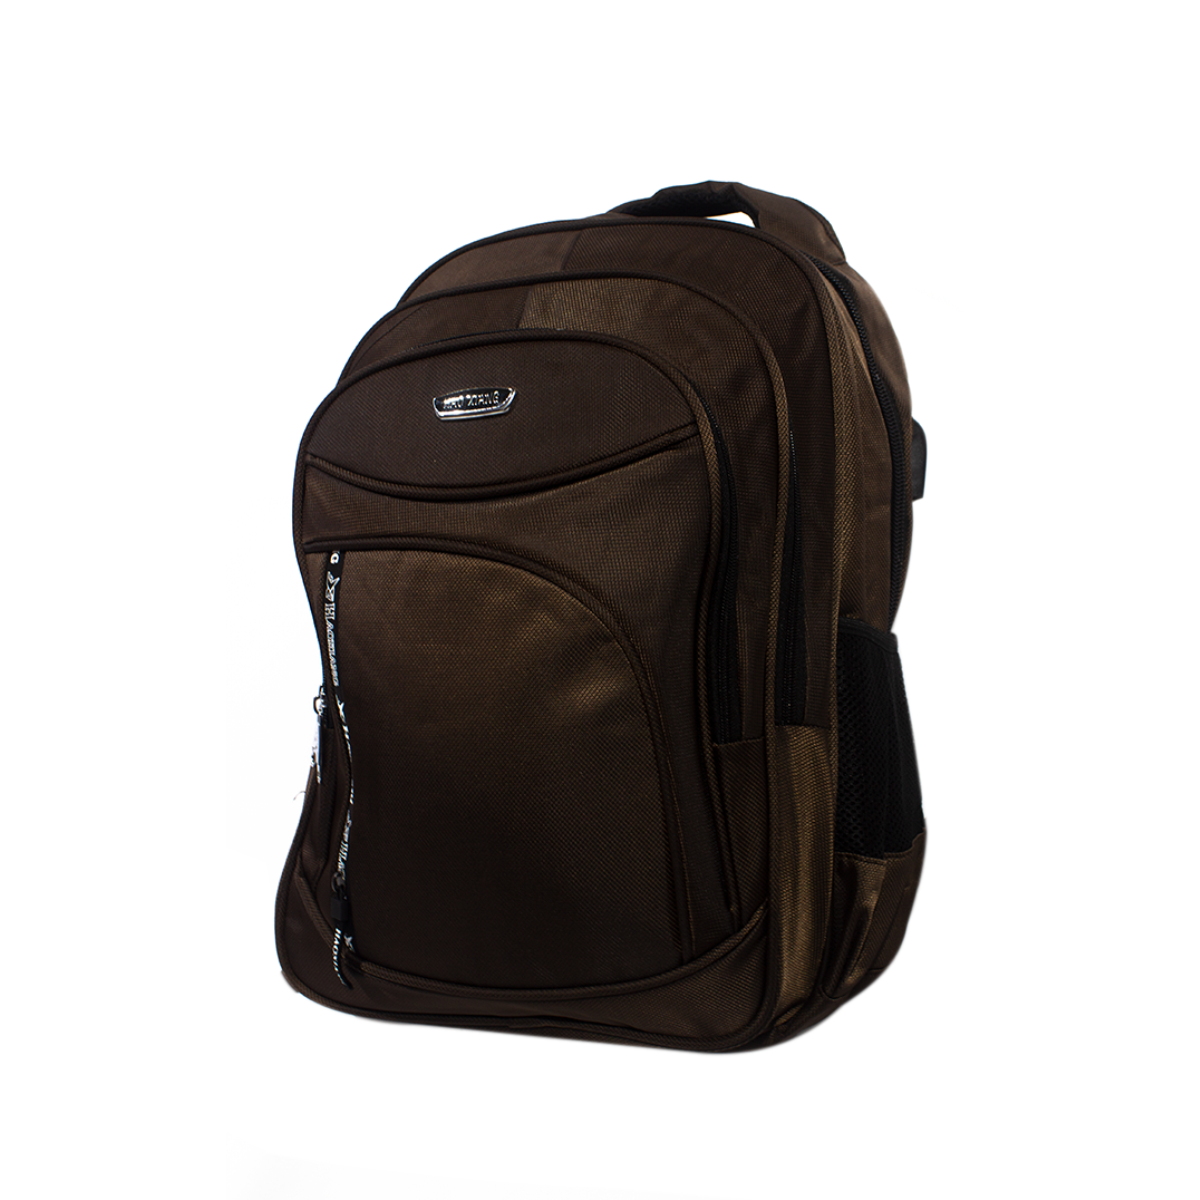 311 Band Novel And Stylish Black Backpack Travel Computer Bag 